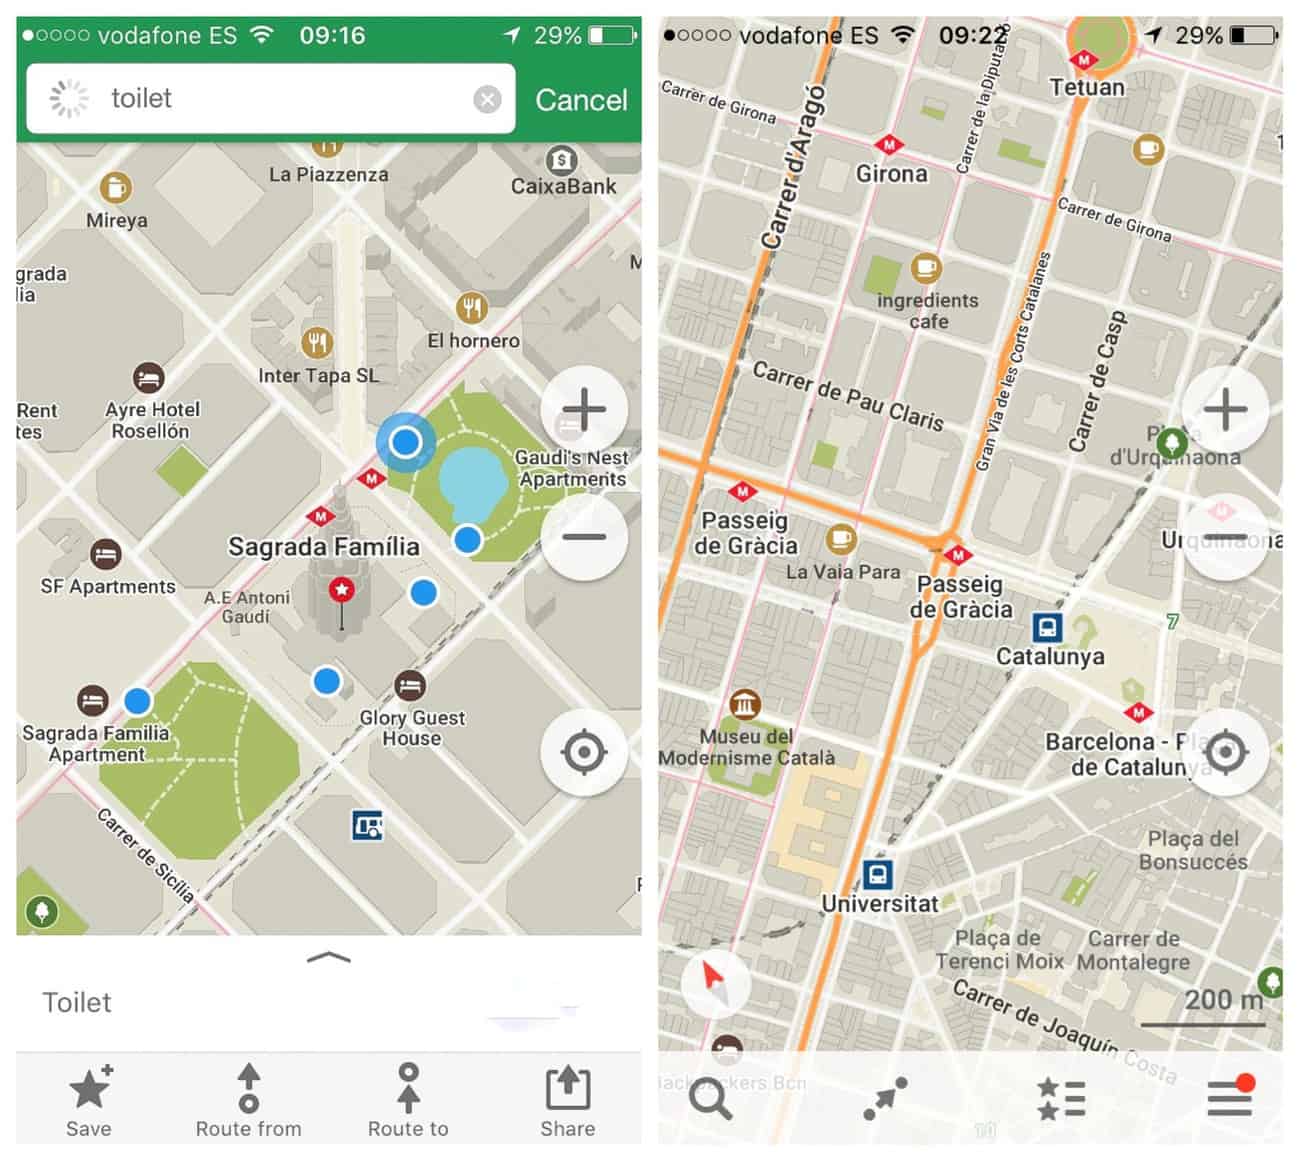 Barcelona - using Maps.me to navigate